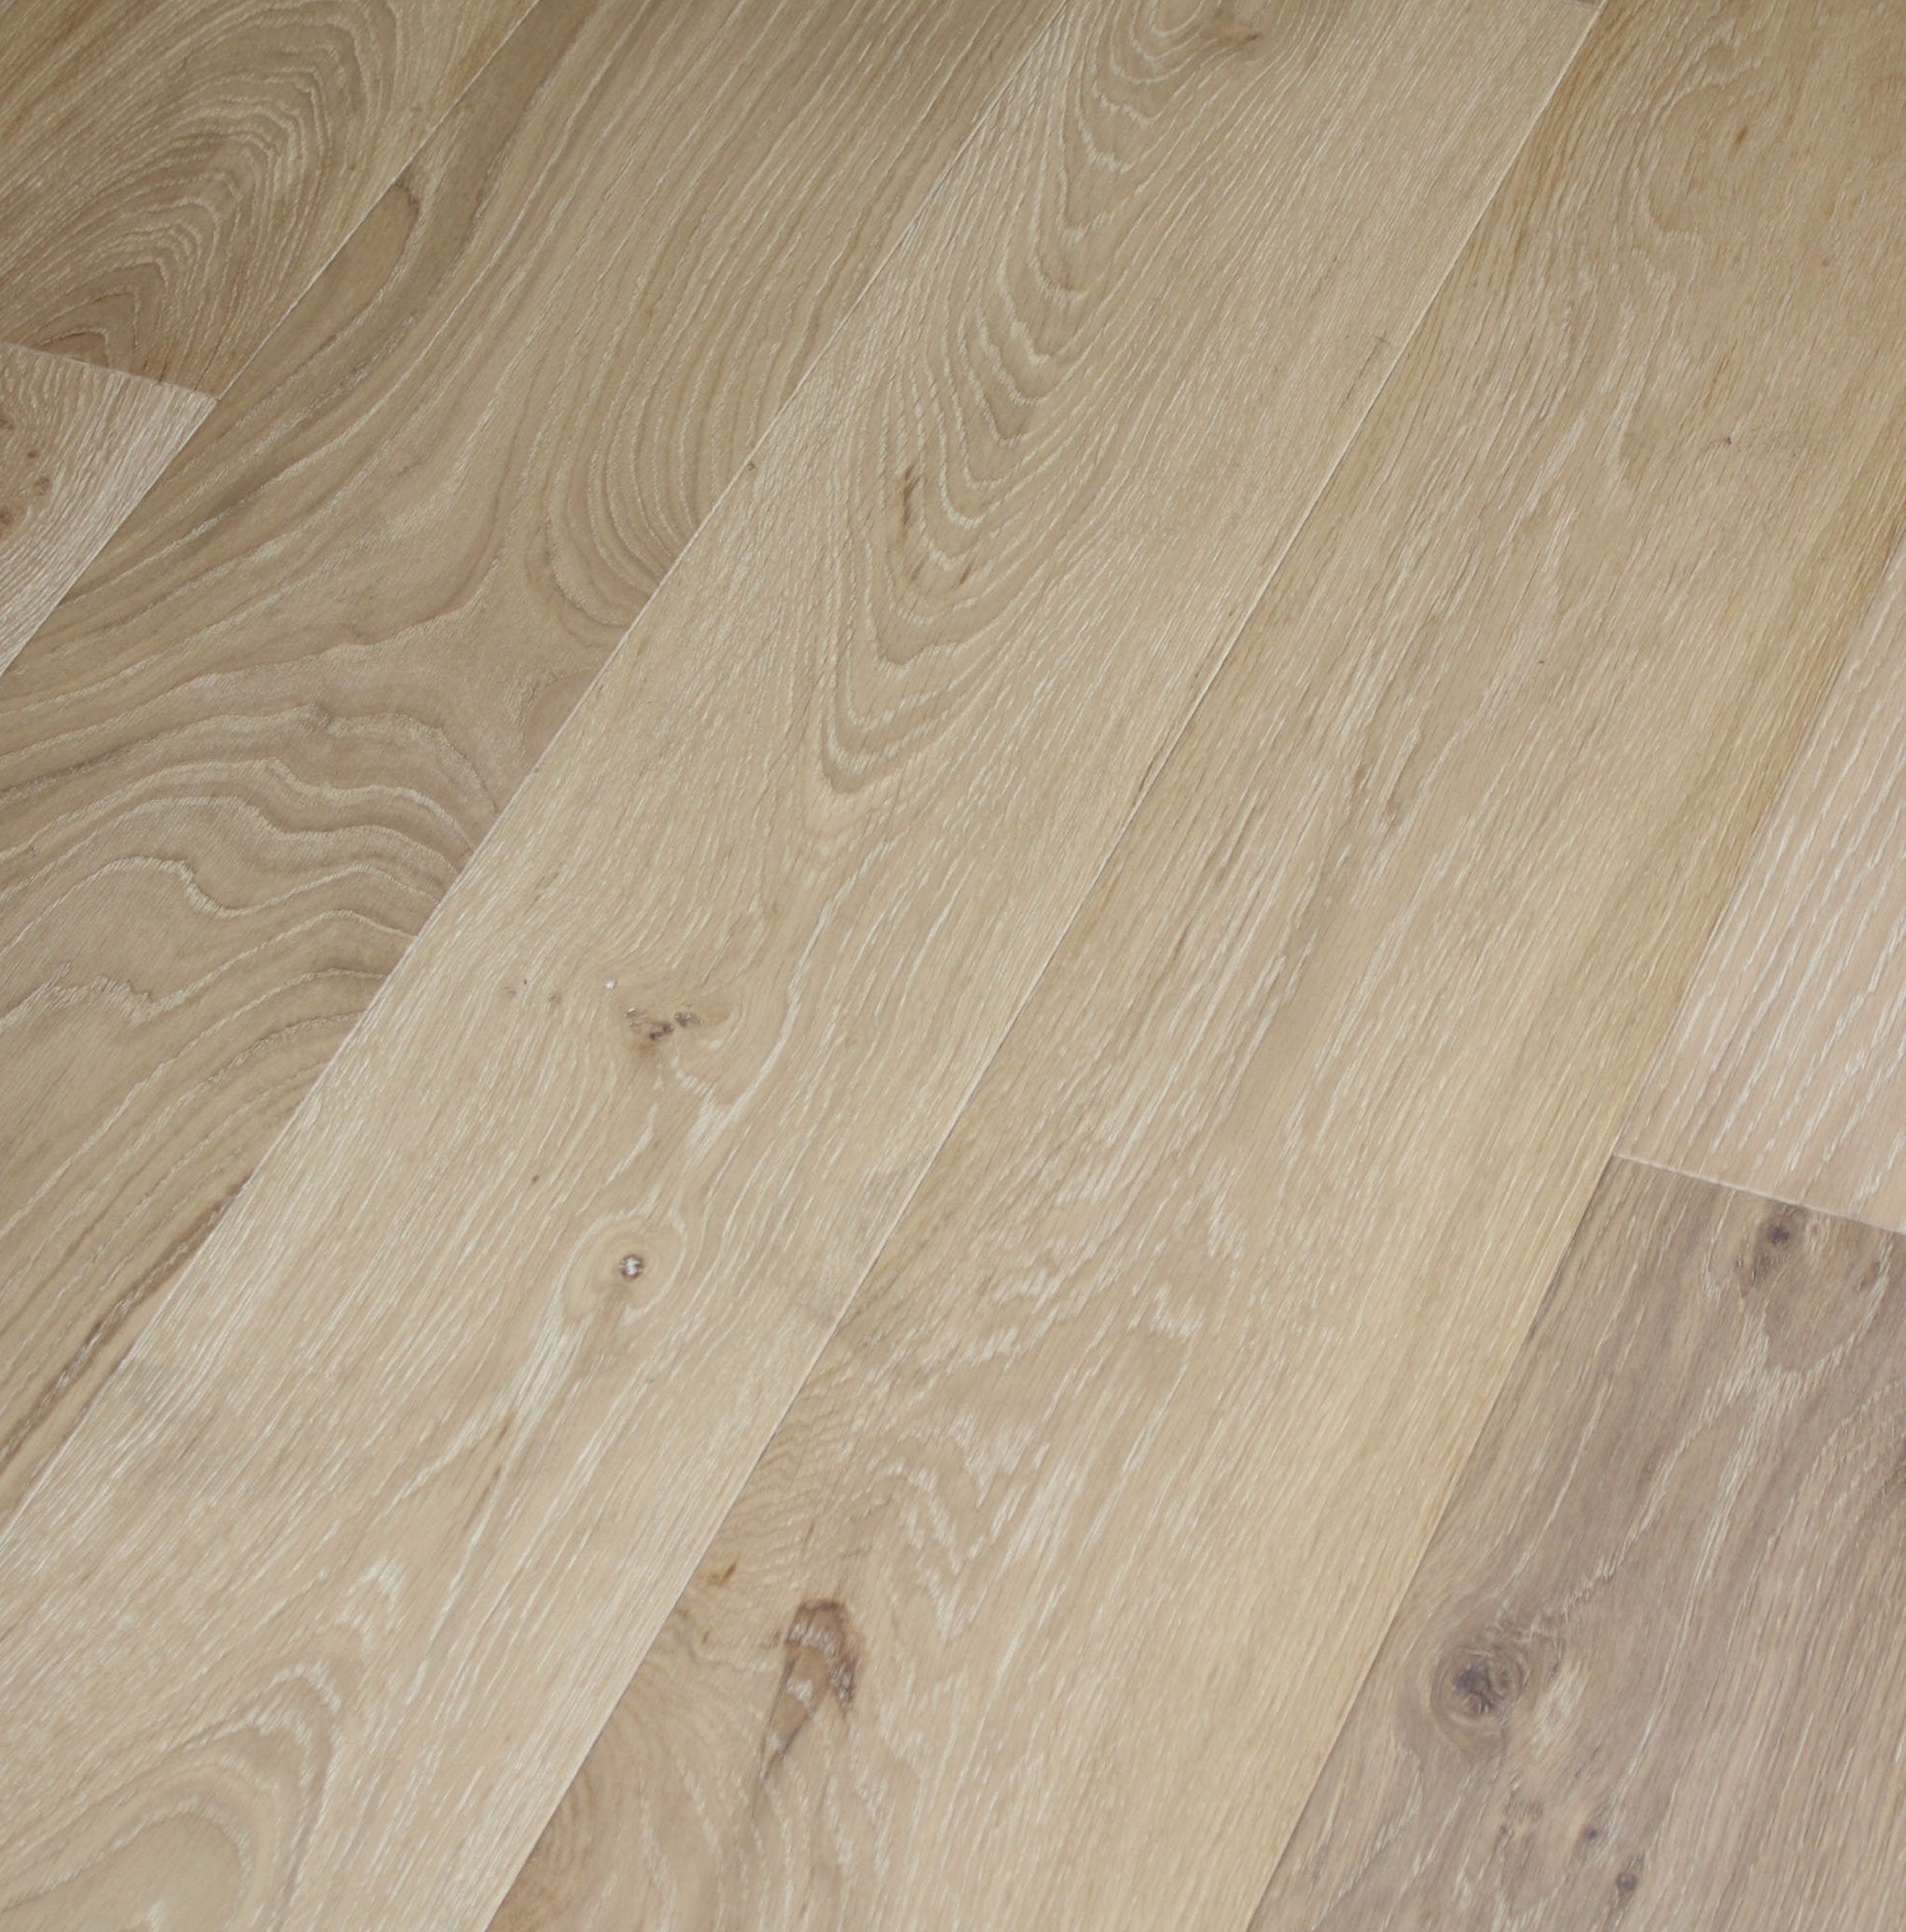 teka royal kensington german french white oak natural hardwood flooring plank white wash distributed by surface group international